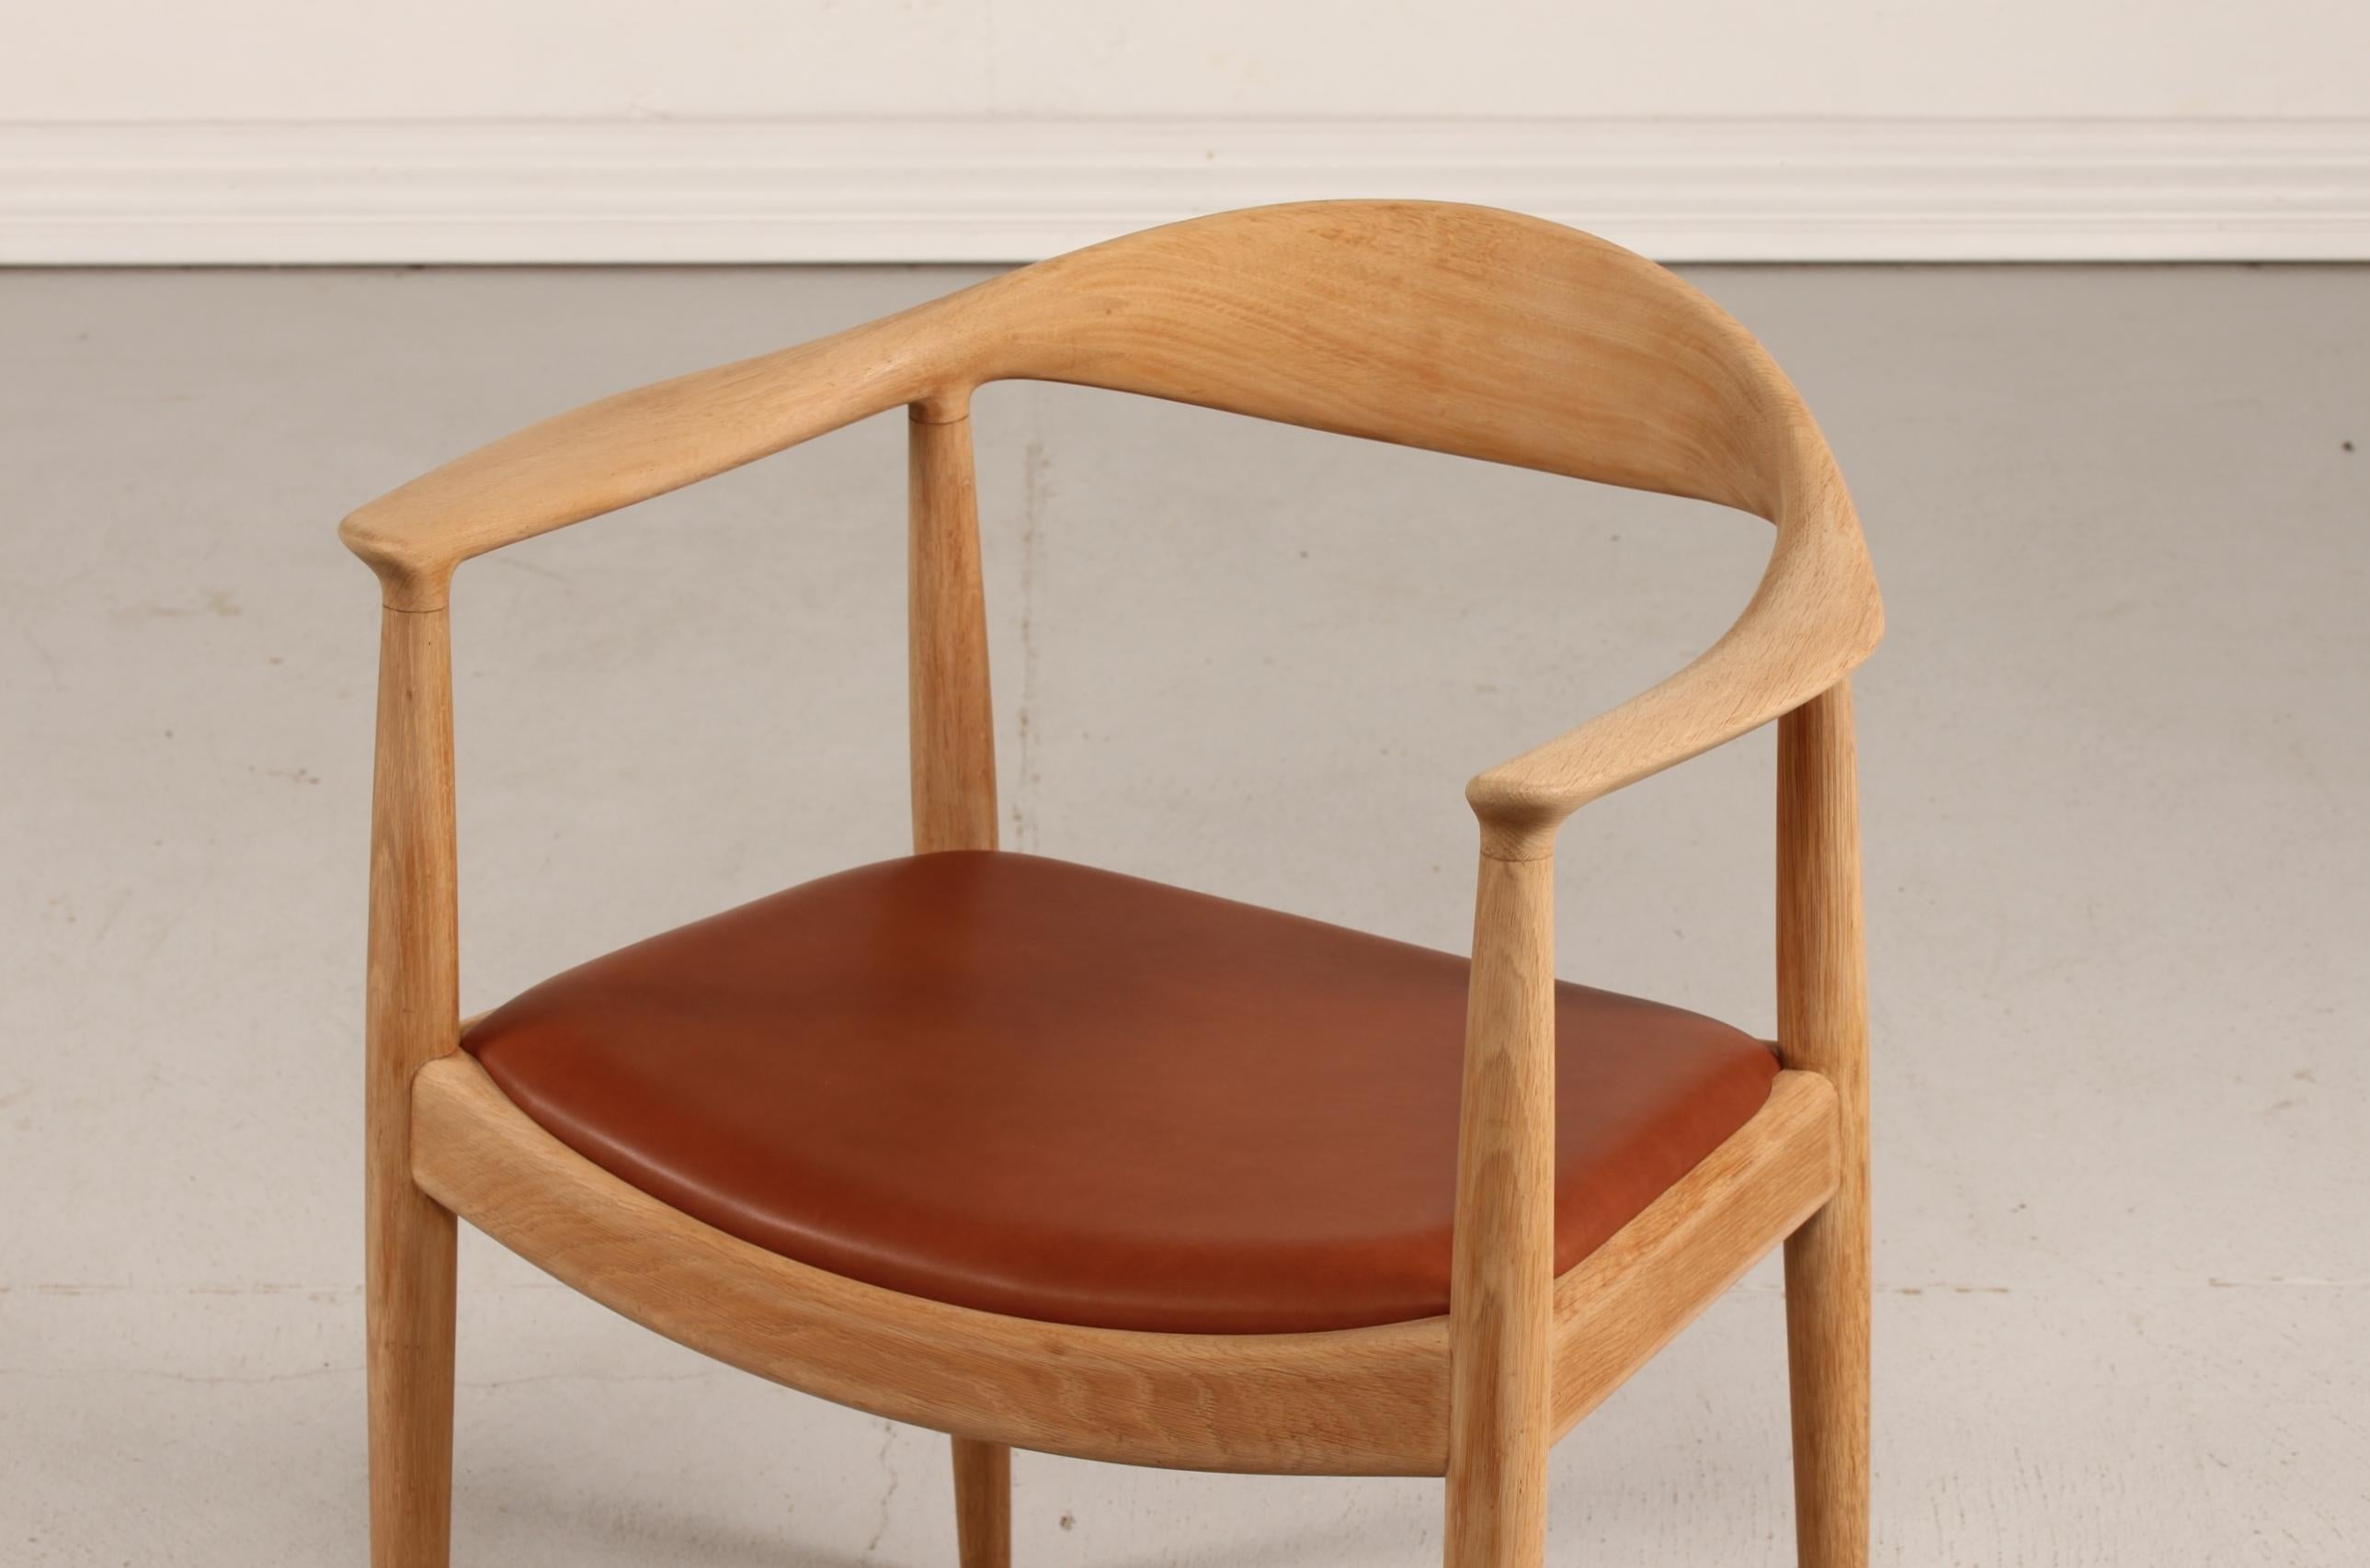 Danish Hans J. Wegner The Chair Model No 503 Oak and Leather by Johannes Hansen 1970s